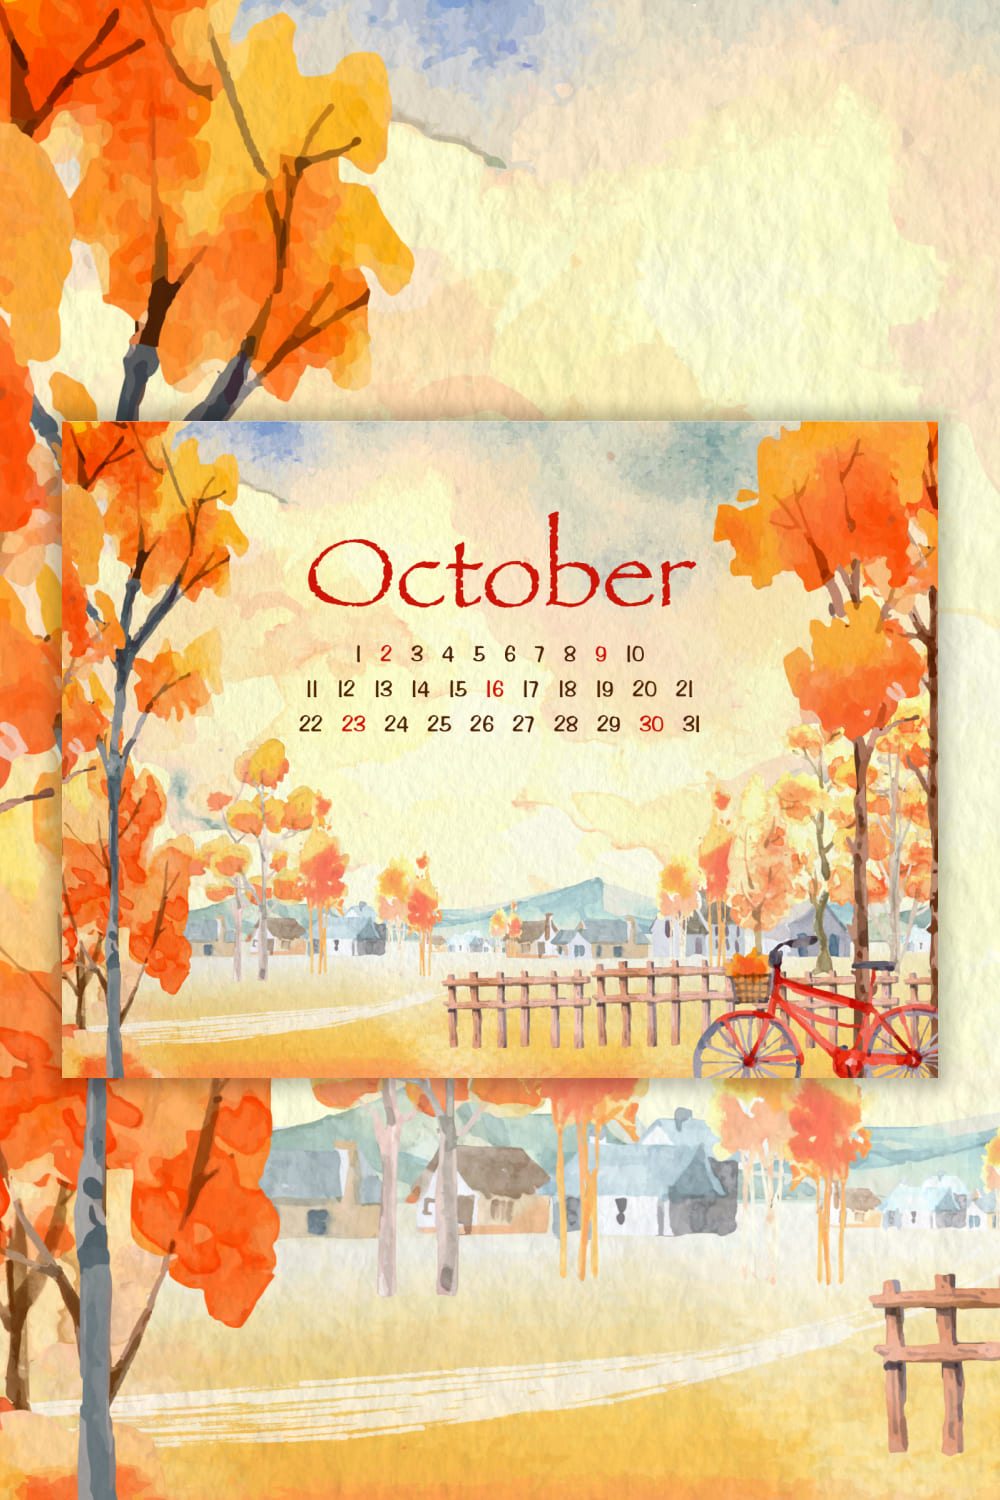 Free Editable October Calendar Pinterest image.